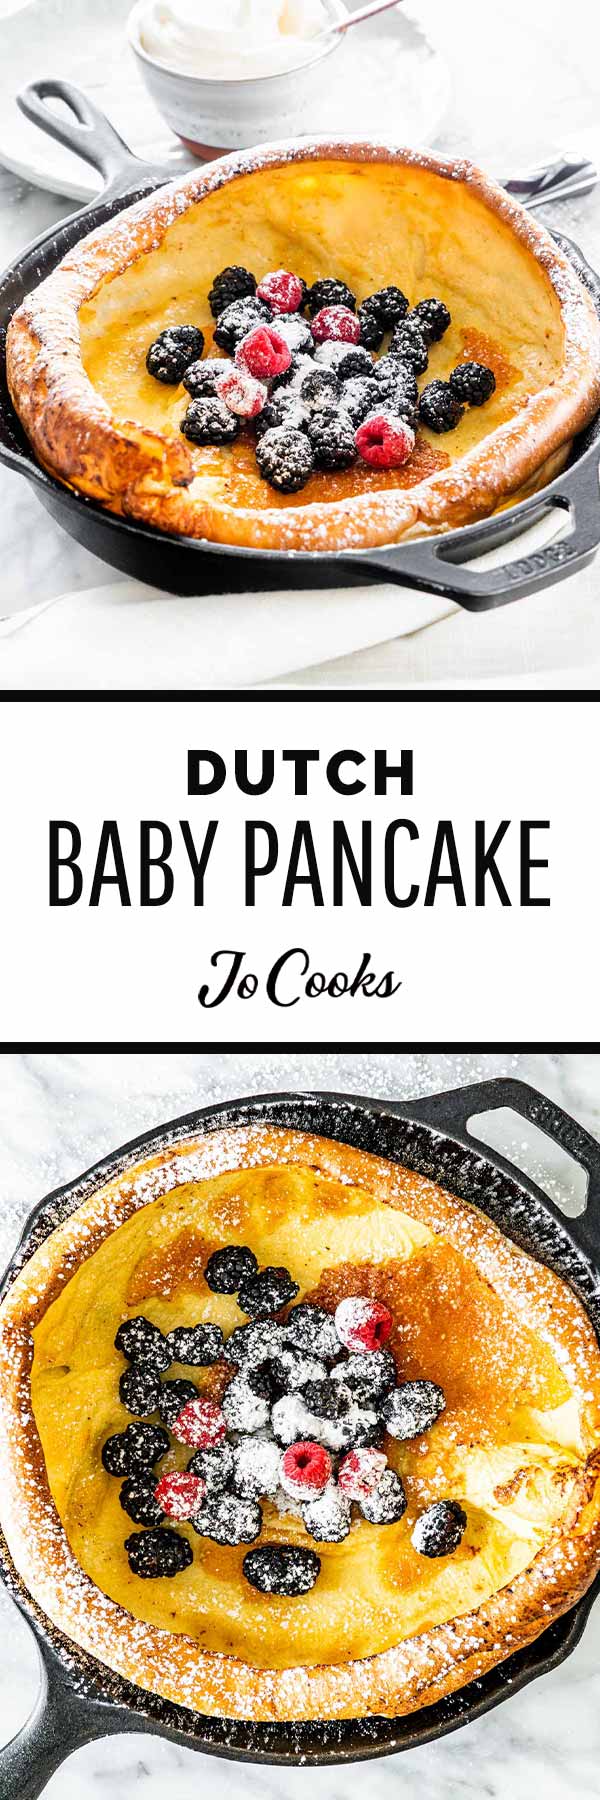 Dutch Baby Pancake - Jo Cooks